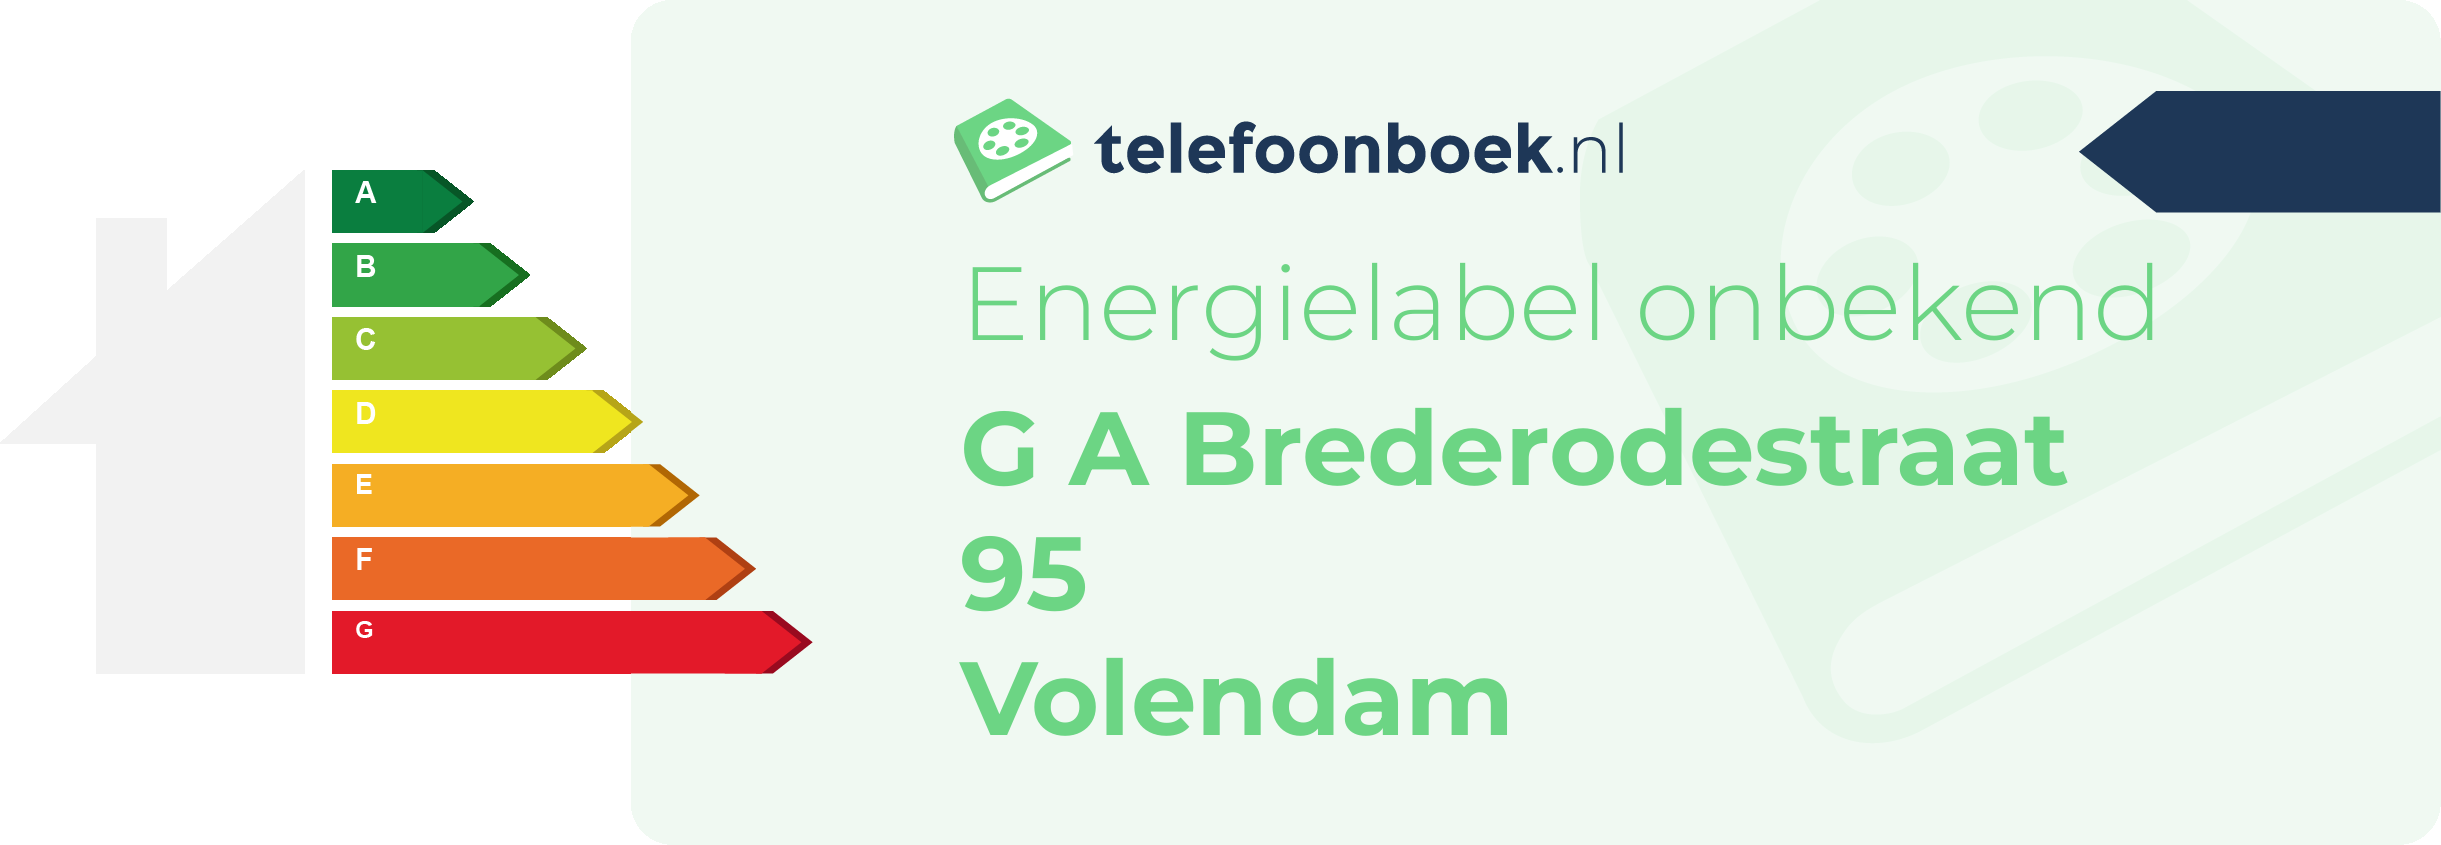 Energielabel G A Brederodestraat 95 Volendam